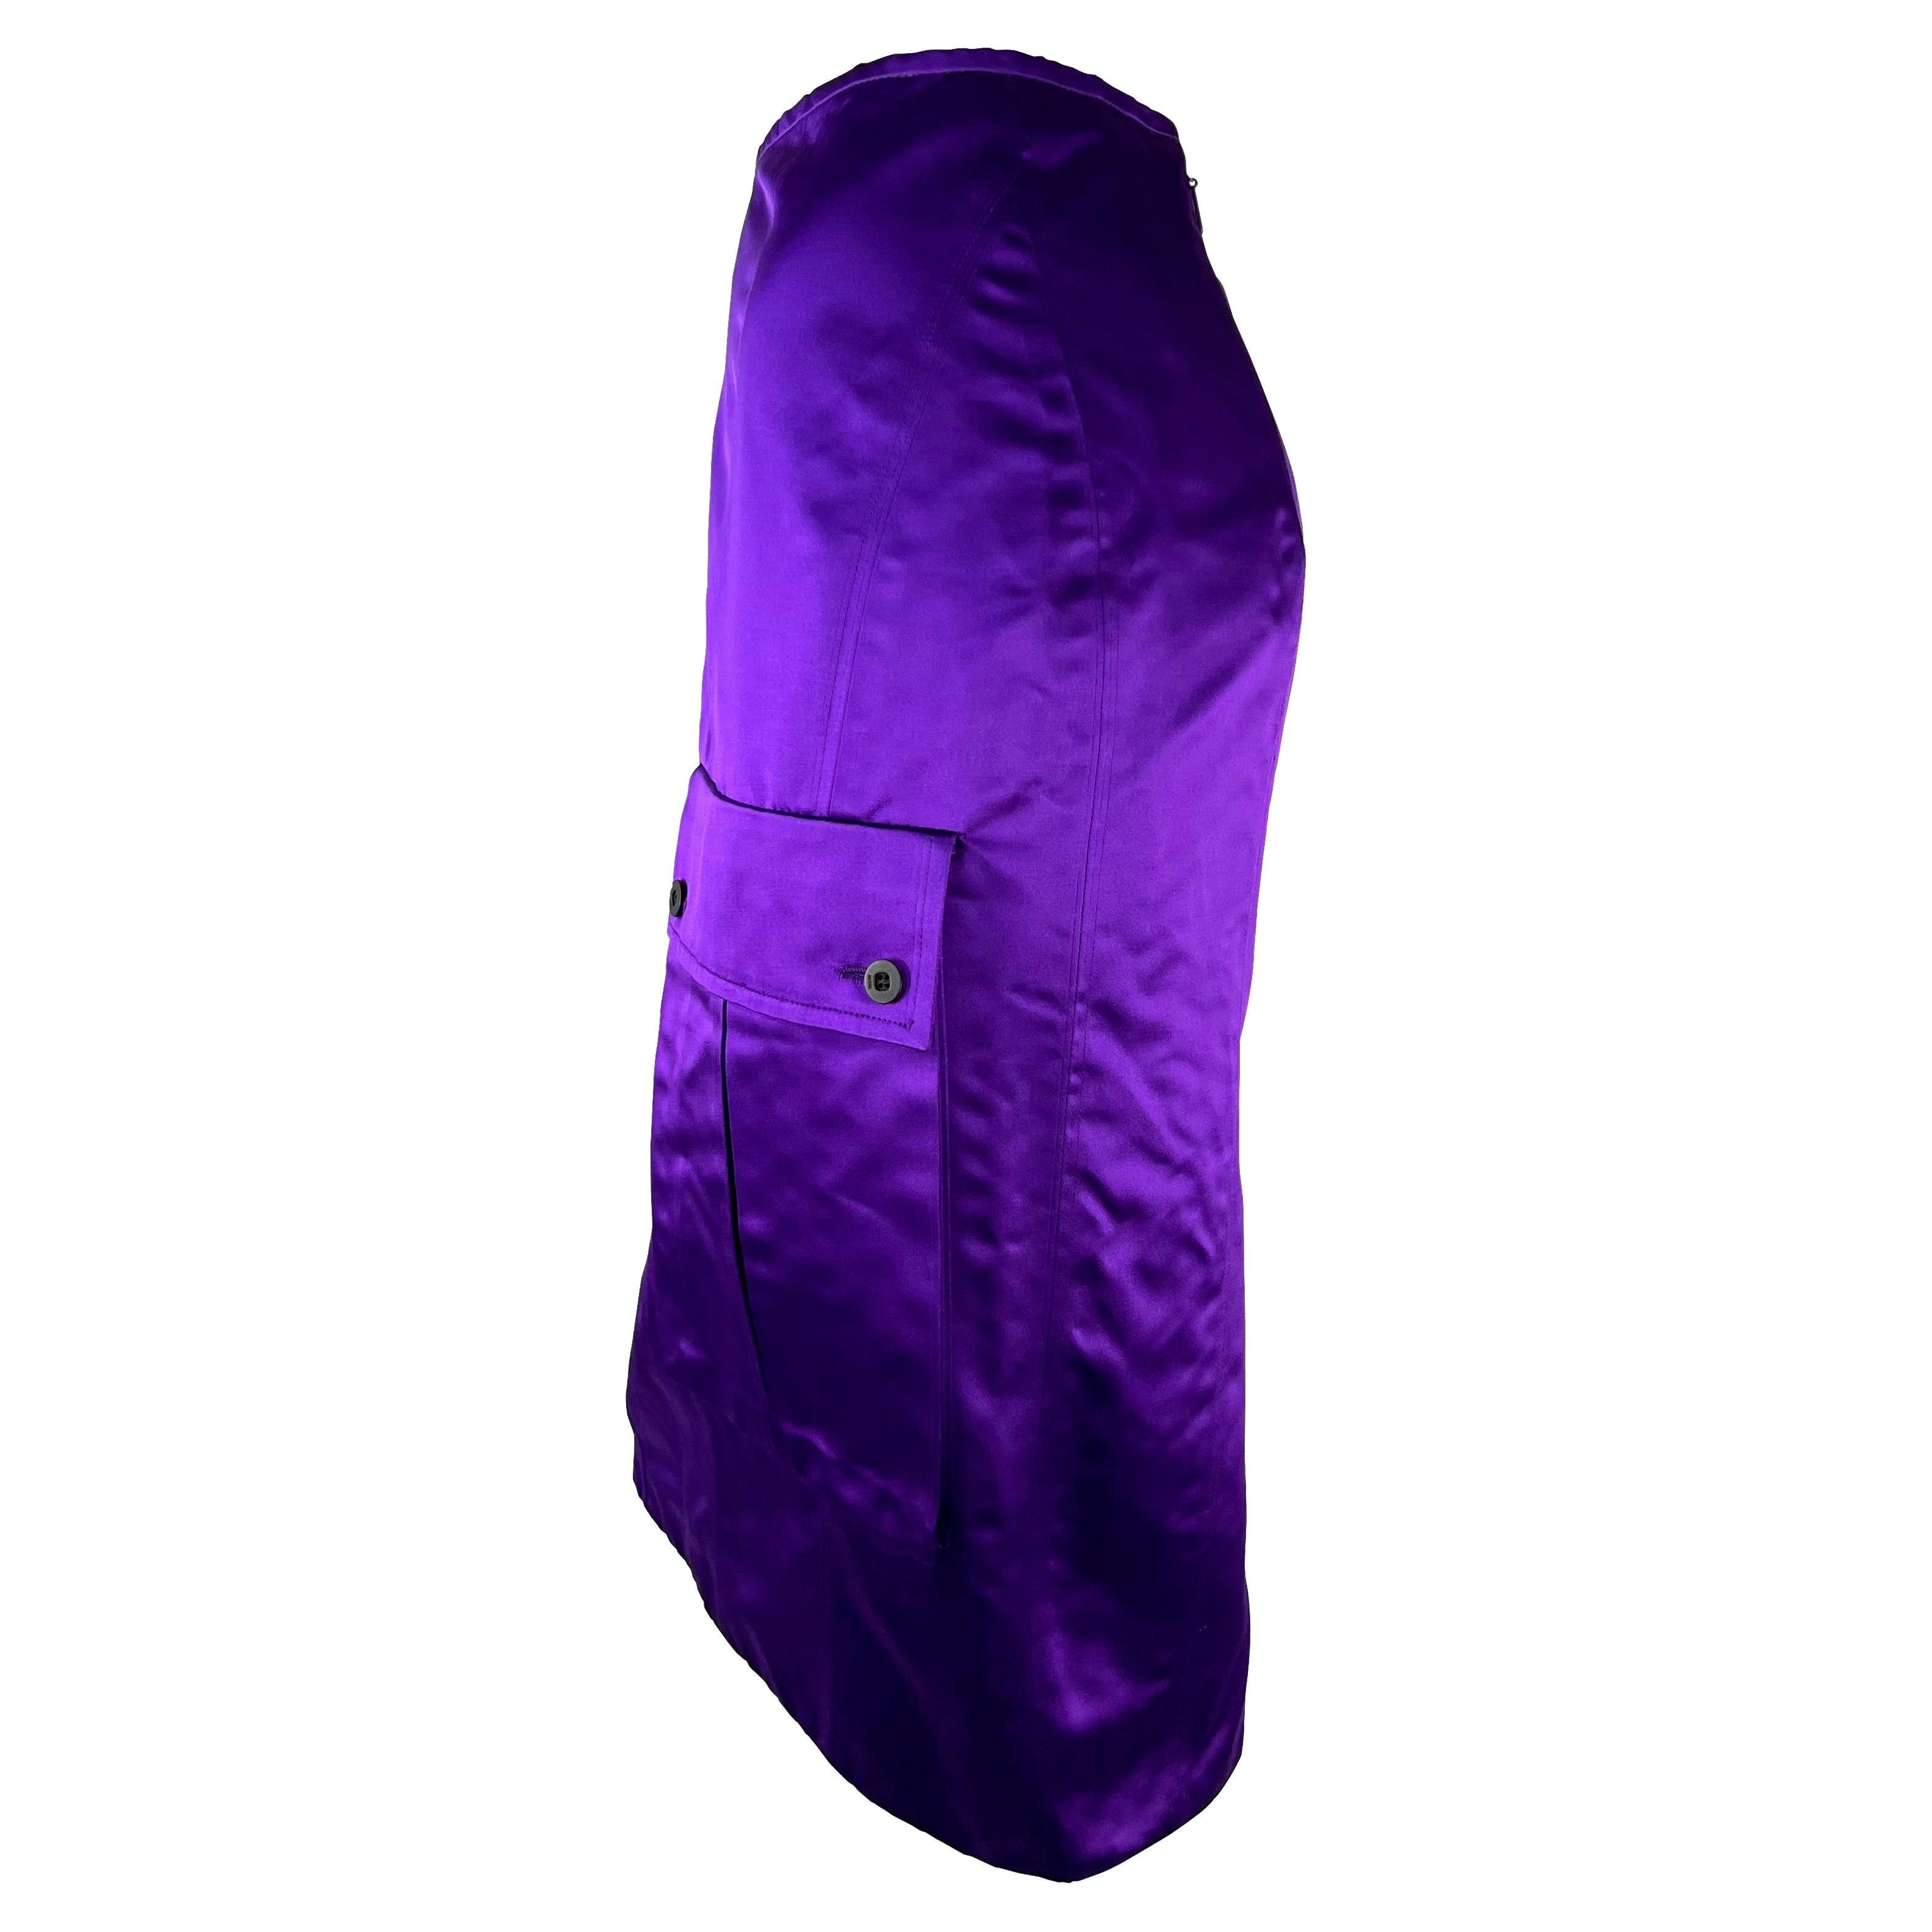 S/S 2001 Gucci by Tom Ford Runway Purple Satin Cargo Pocket Pencil Skirt Pour femmes en vente